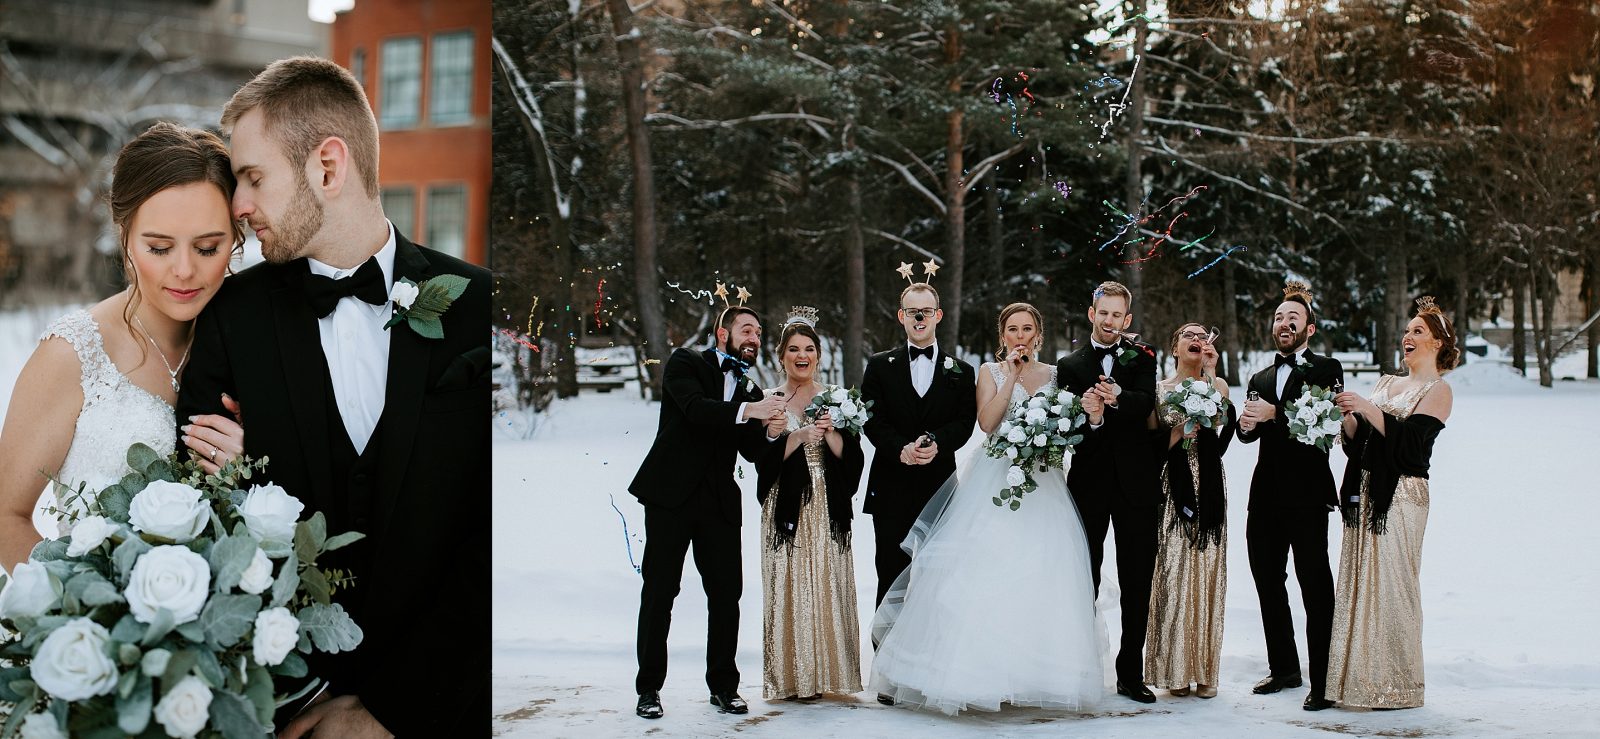 Romantic elegant winter wedding at the Fairmont Hotel Macdonald on New Years Eve in Edmonton